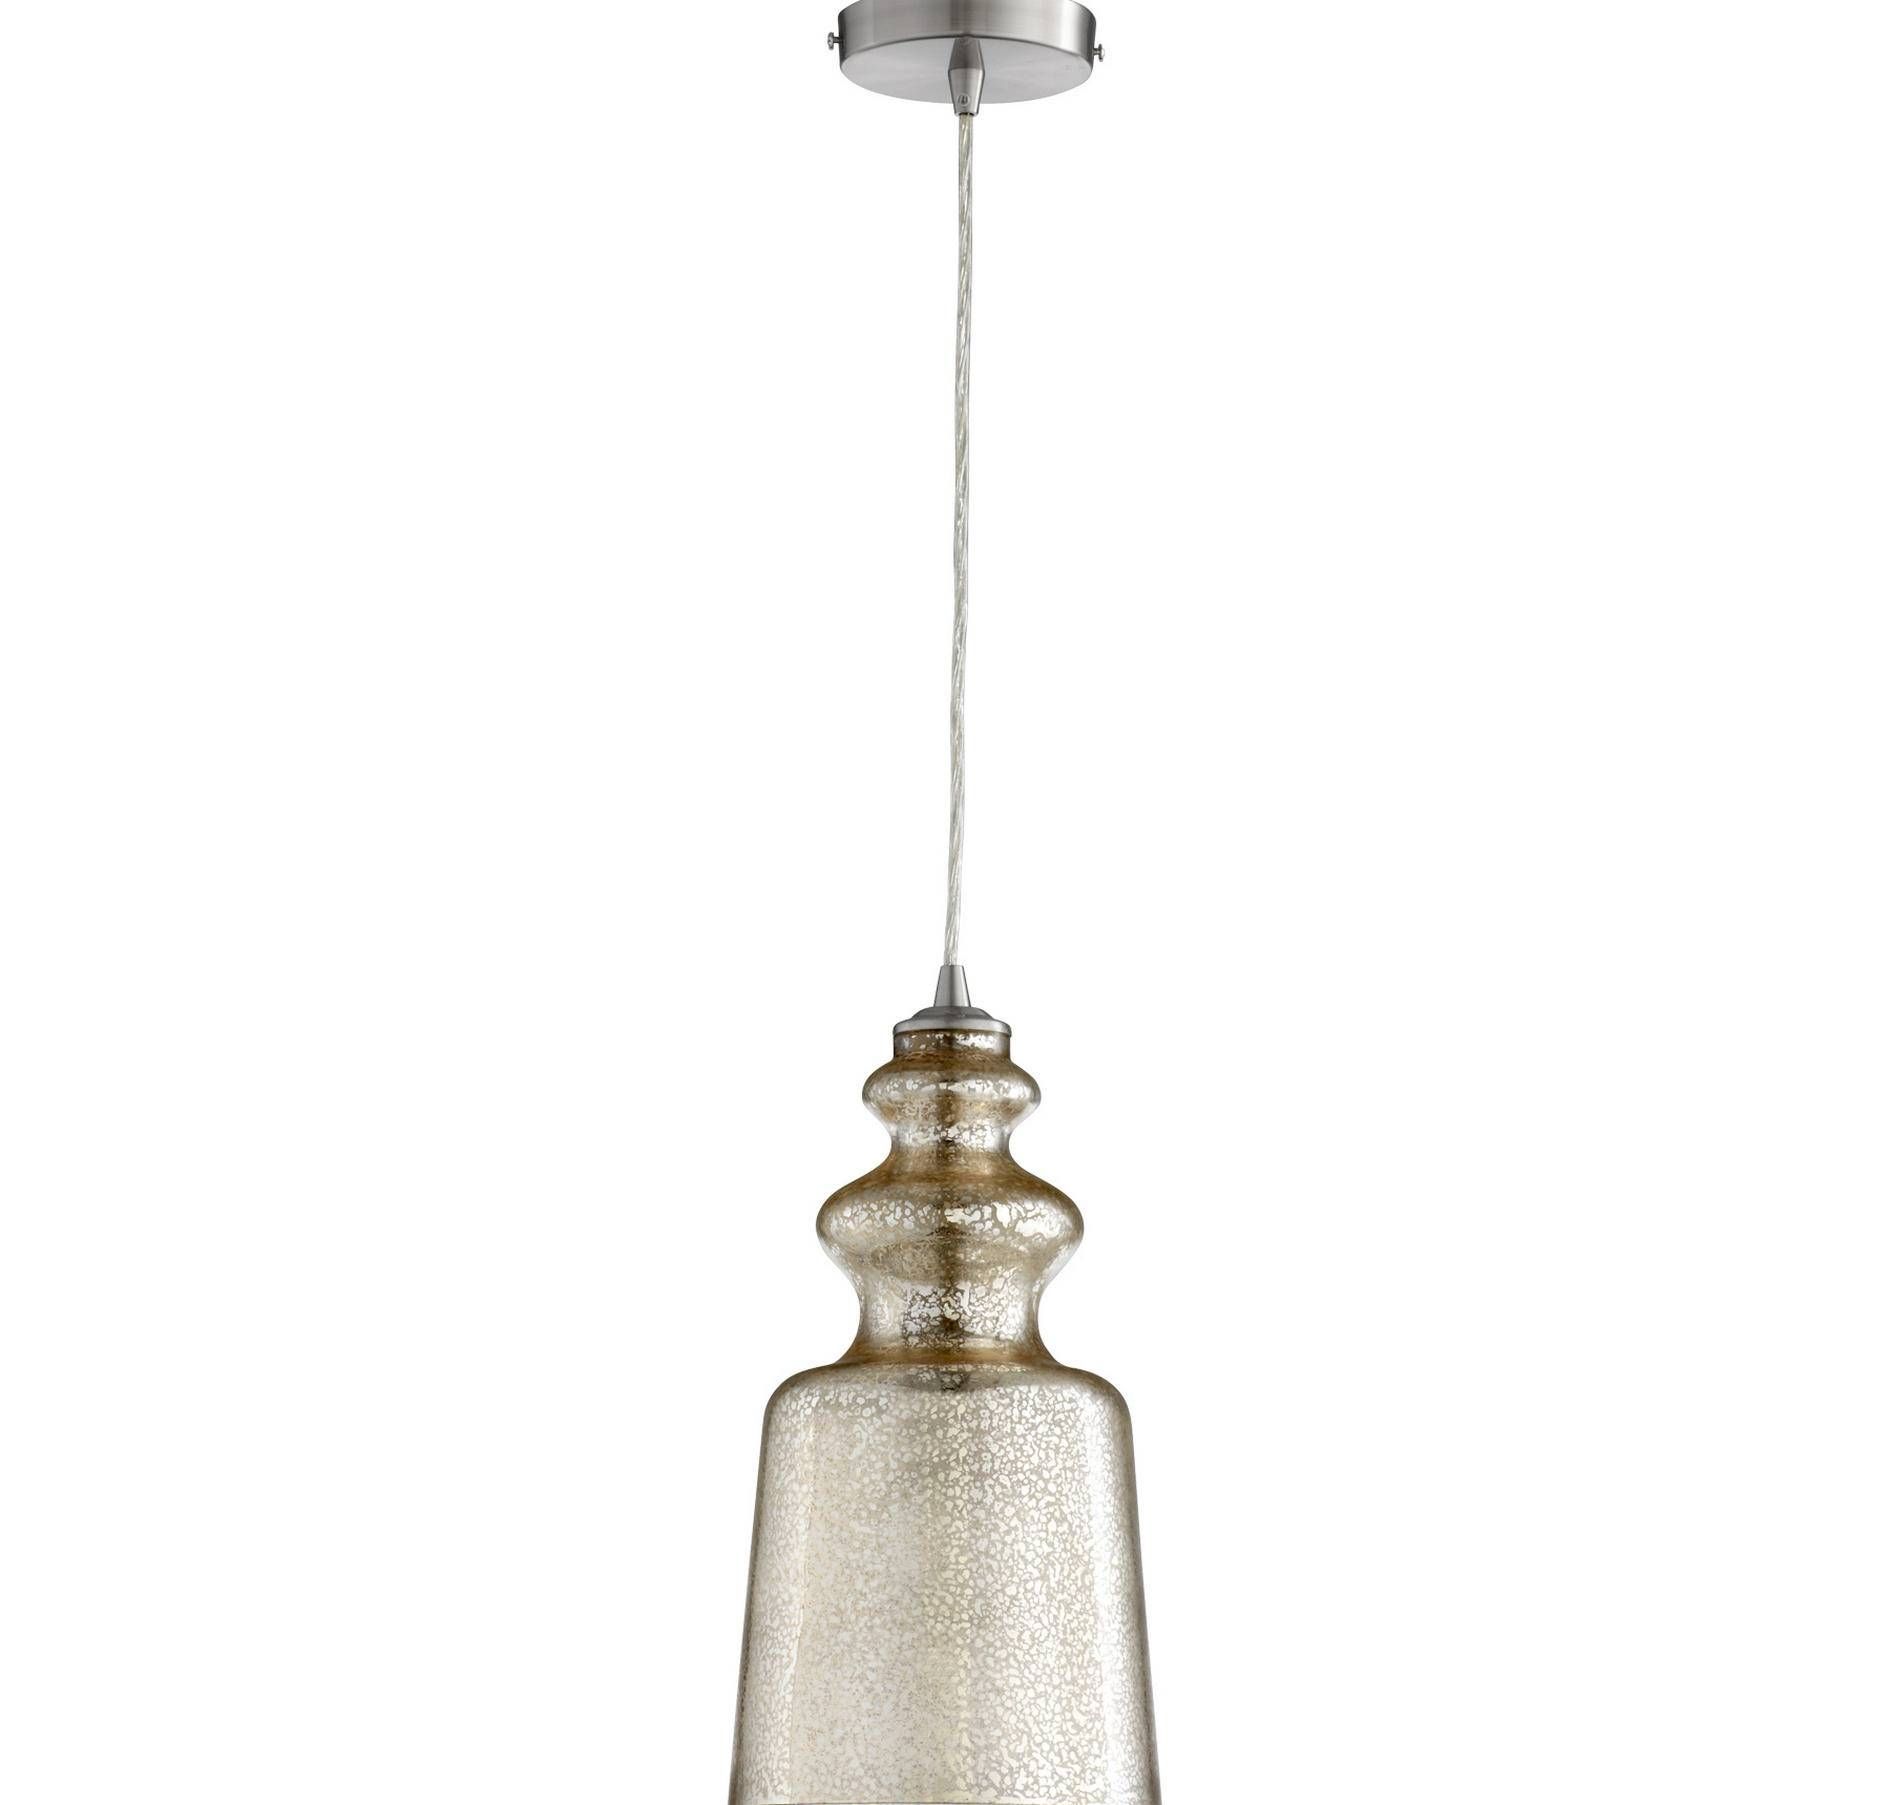 Chandelier: Enticing Mercury Glass Light Fixtures | Attractive With Mercury Glass Lights Fixtures (View 10 of 15)